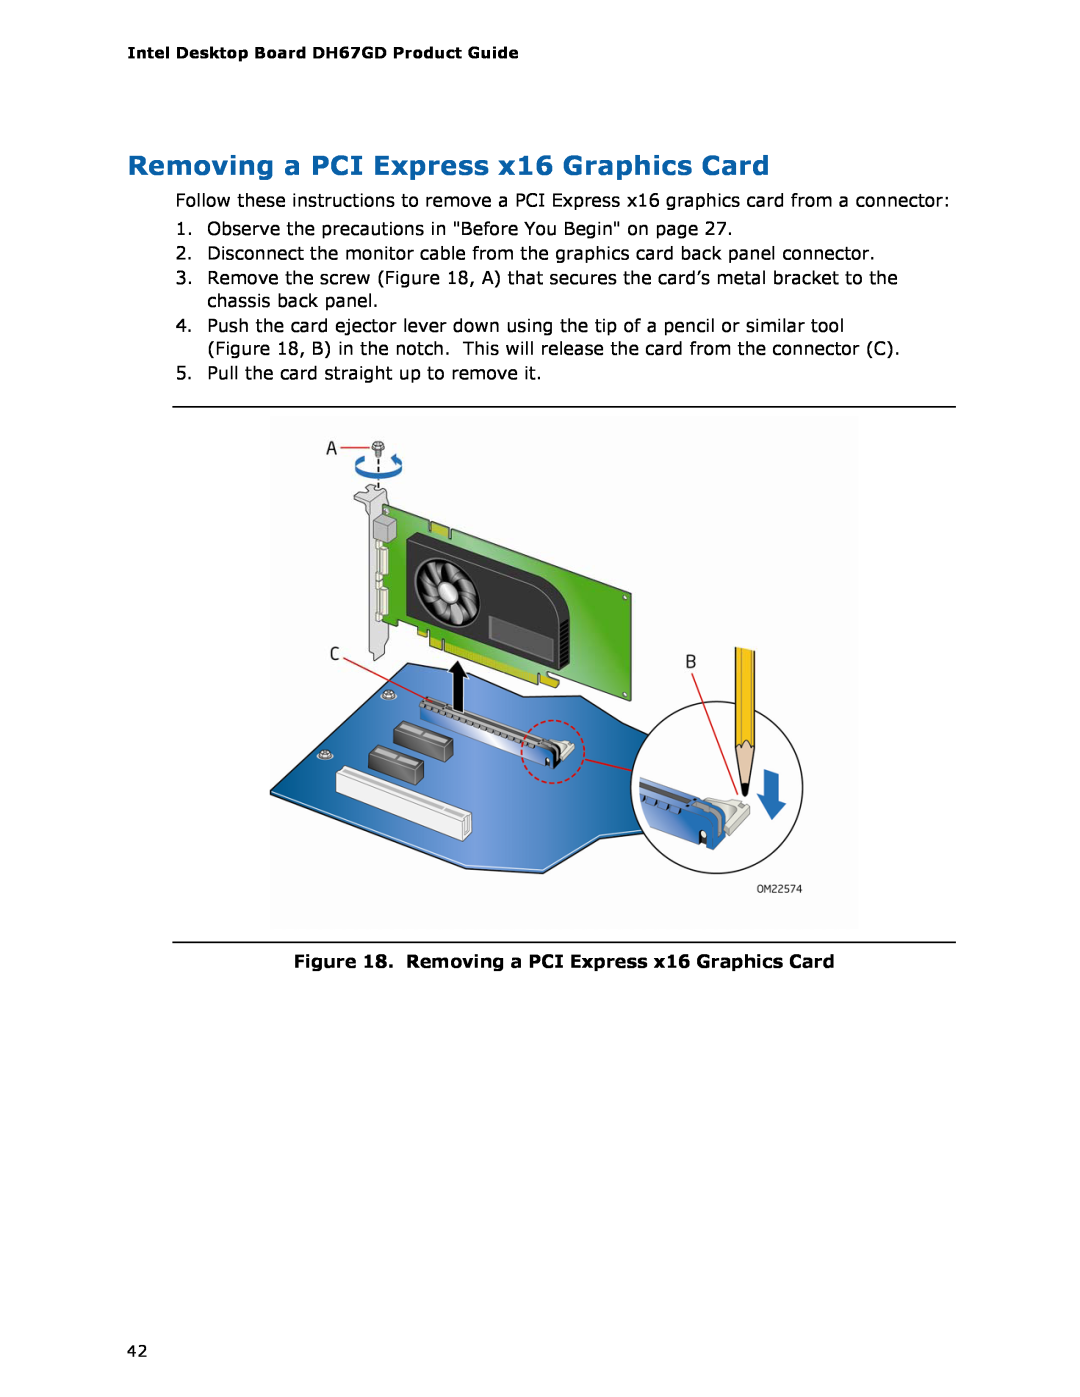 Intel BLKDH67GDB3, G13841-001 manual Removing a PCI Express x16 Graphics Card 